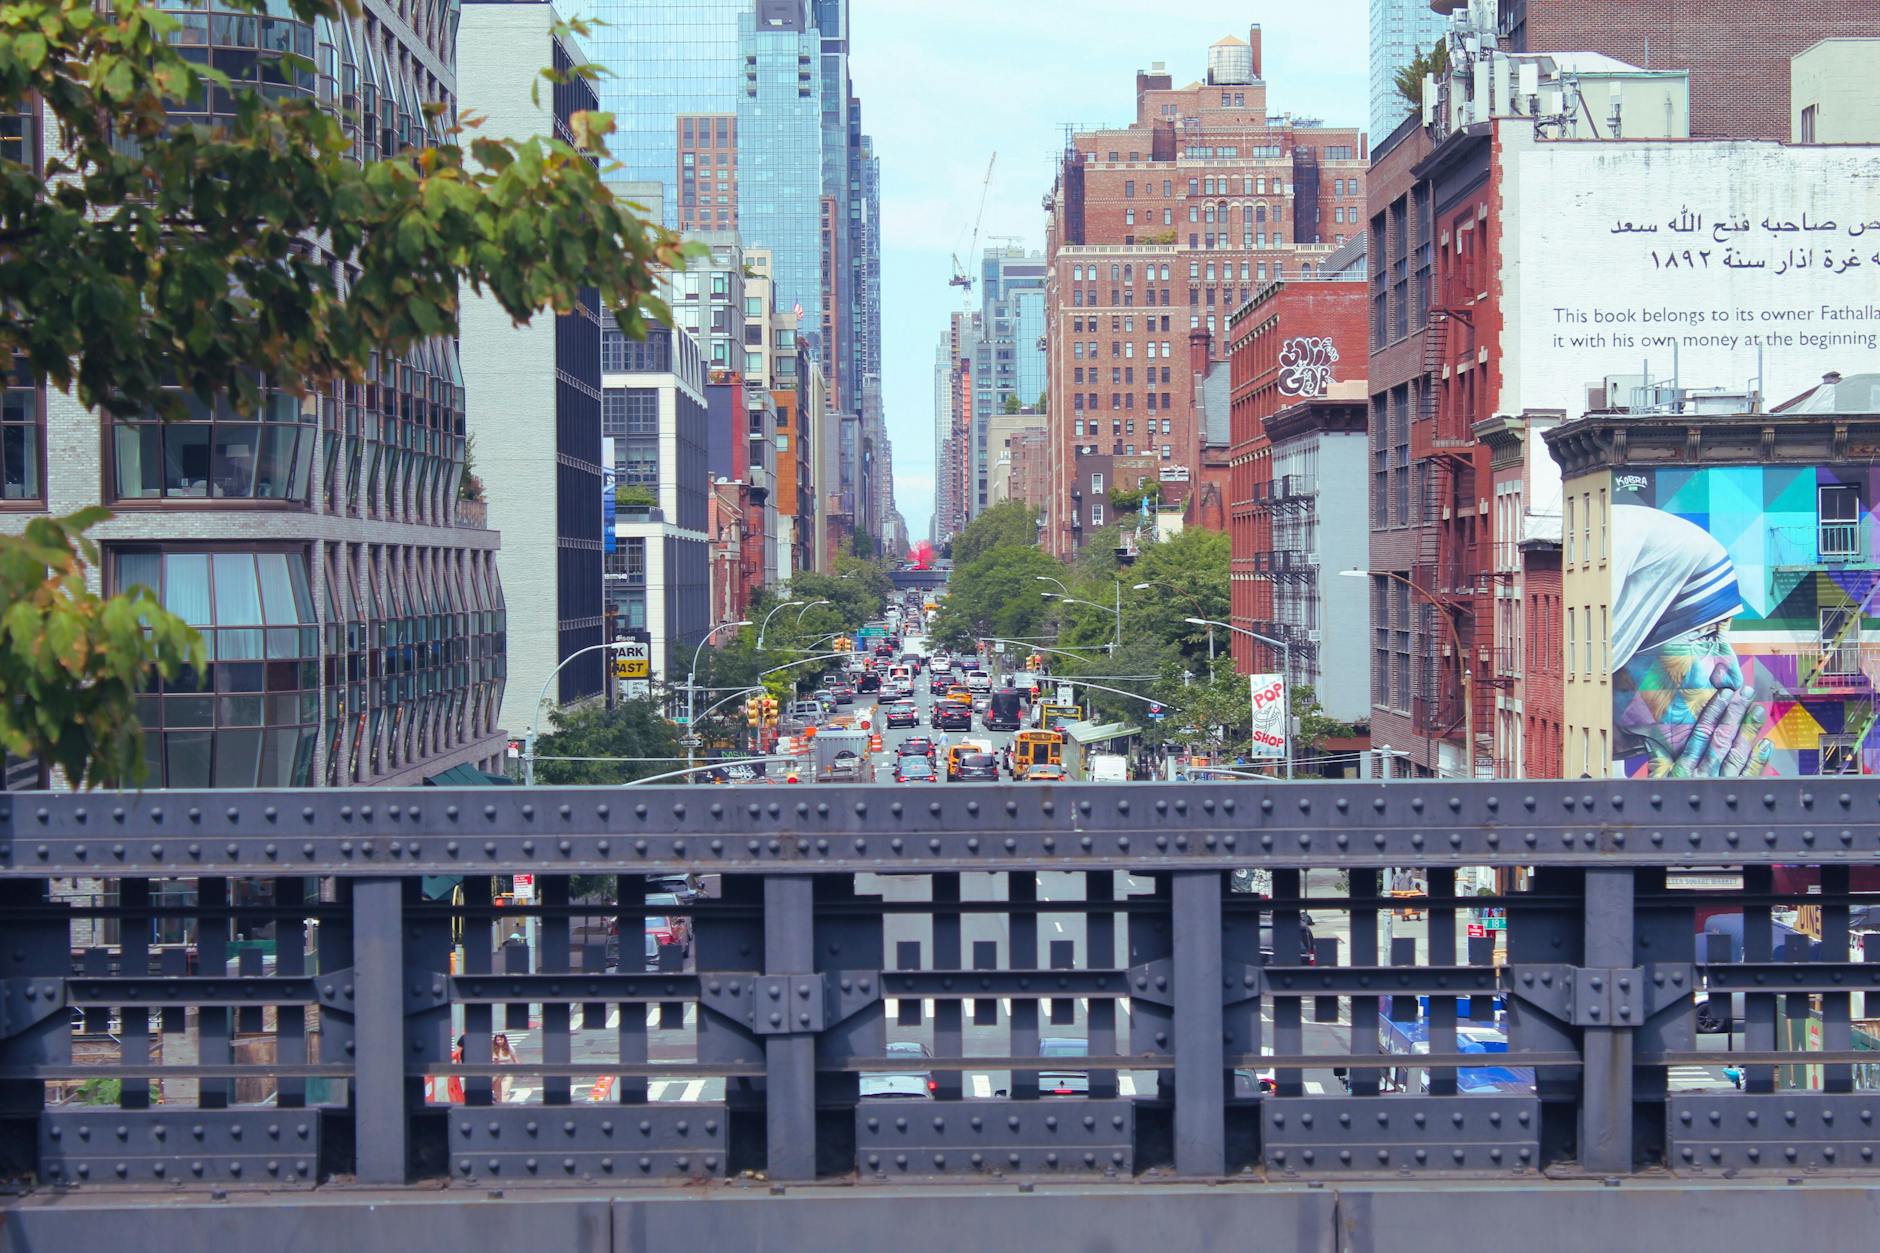 street in new york seen from an iron bridge